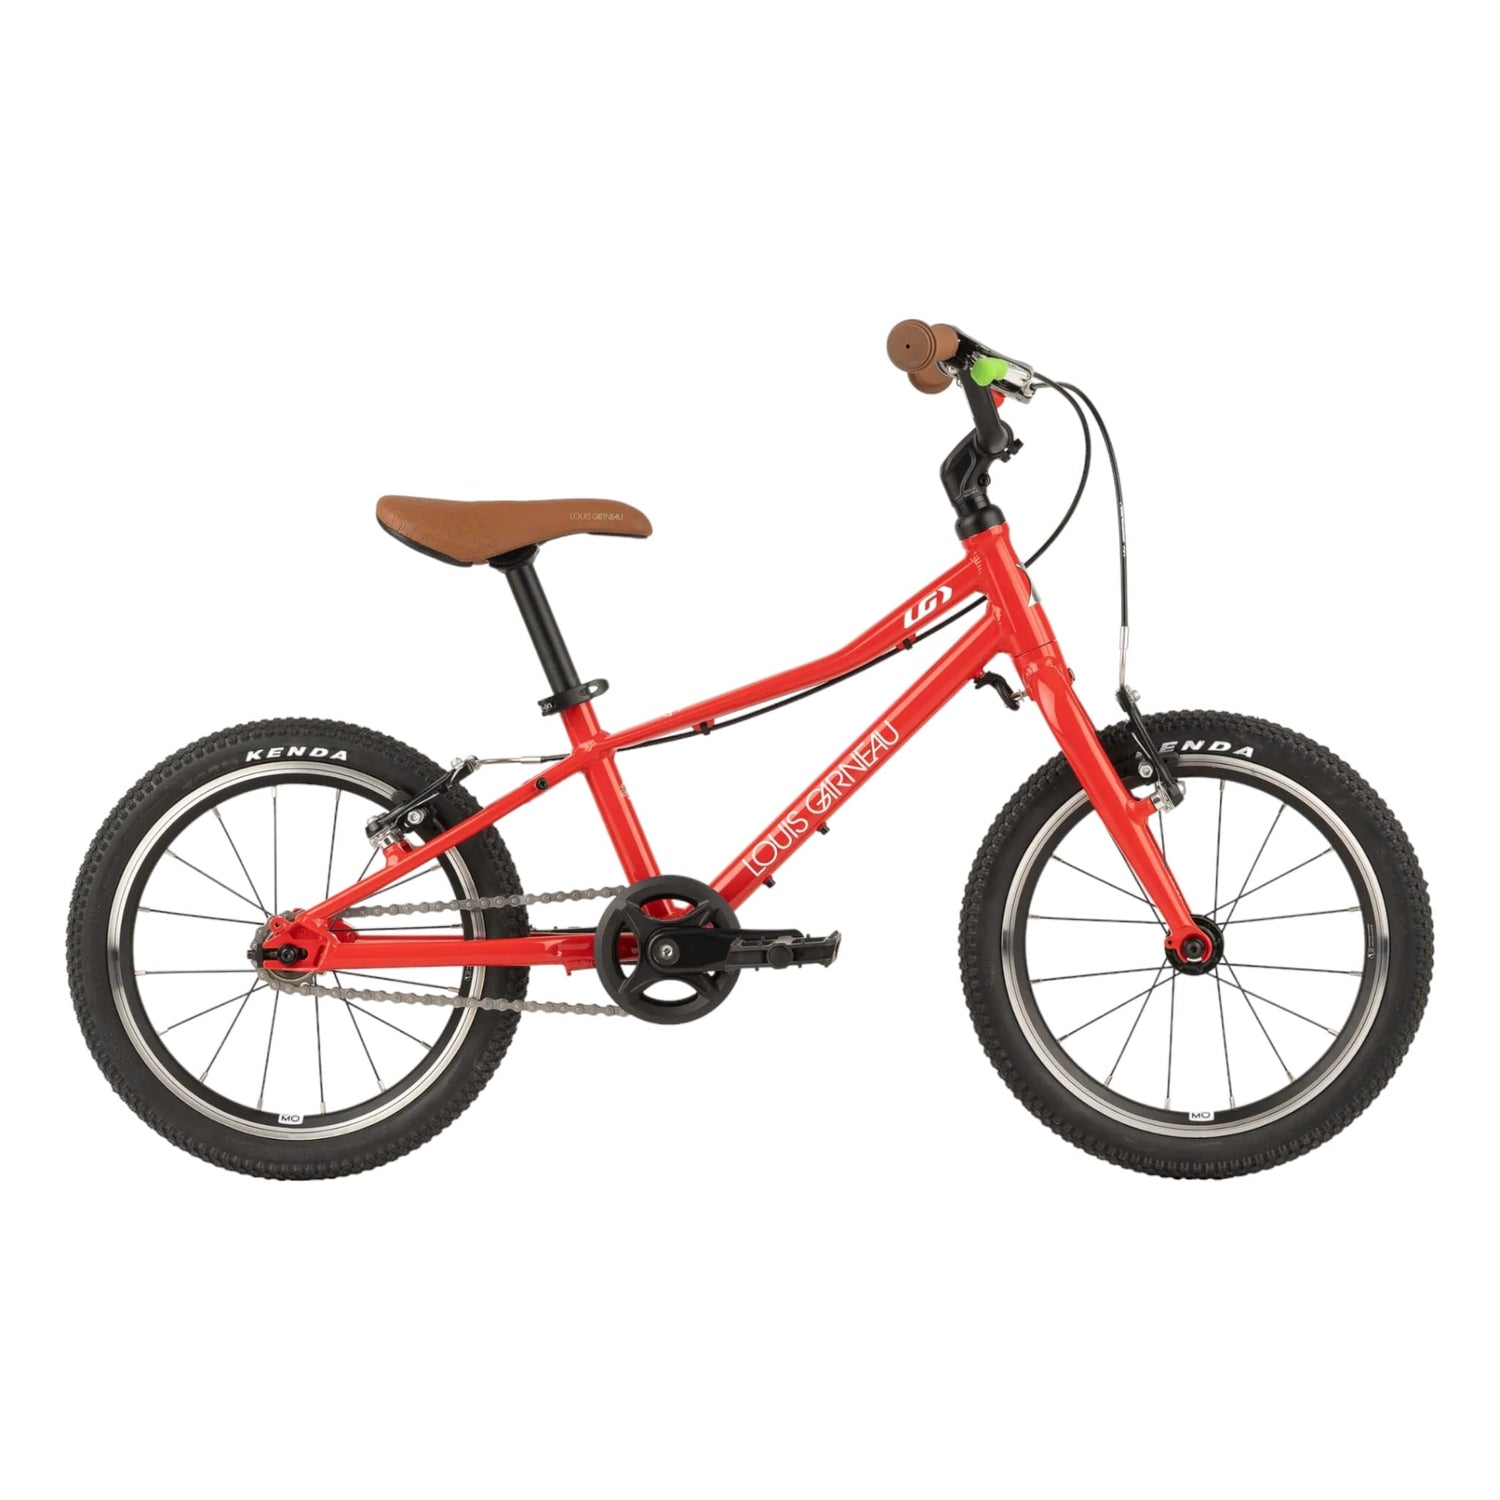 16" Kid’s bike – LG03 Junior Bike